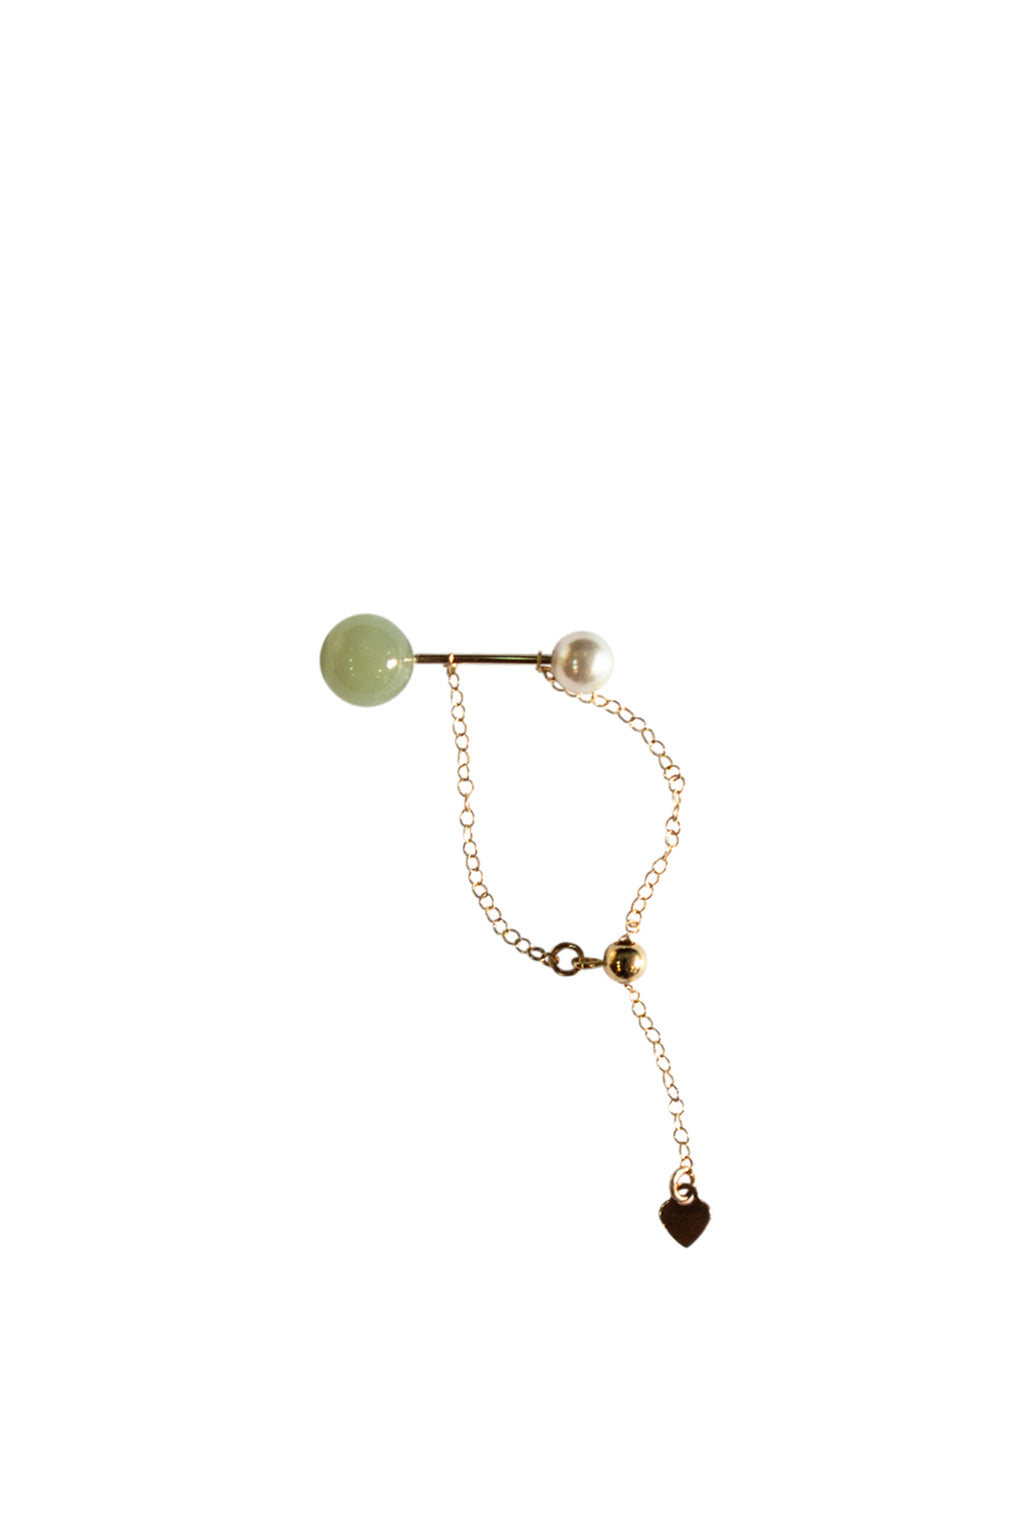 seree-taylor-skinny-adjustable-ring-pearl-nephrite-jade-ring